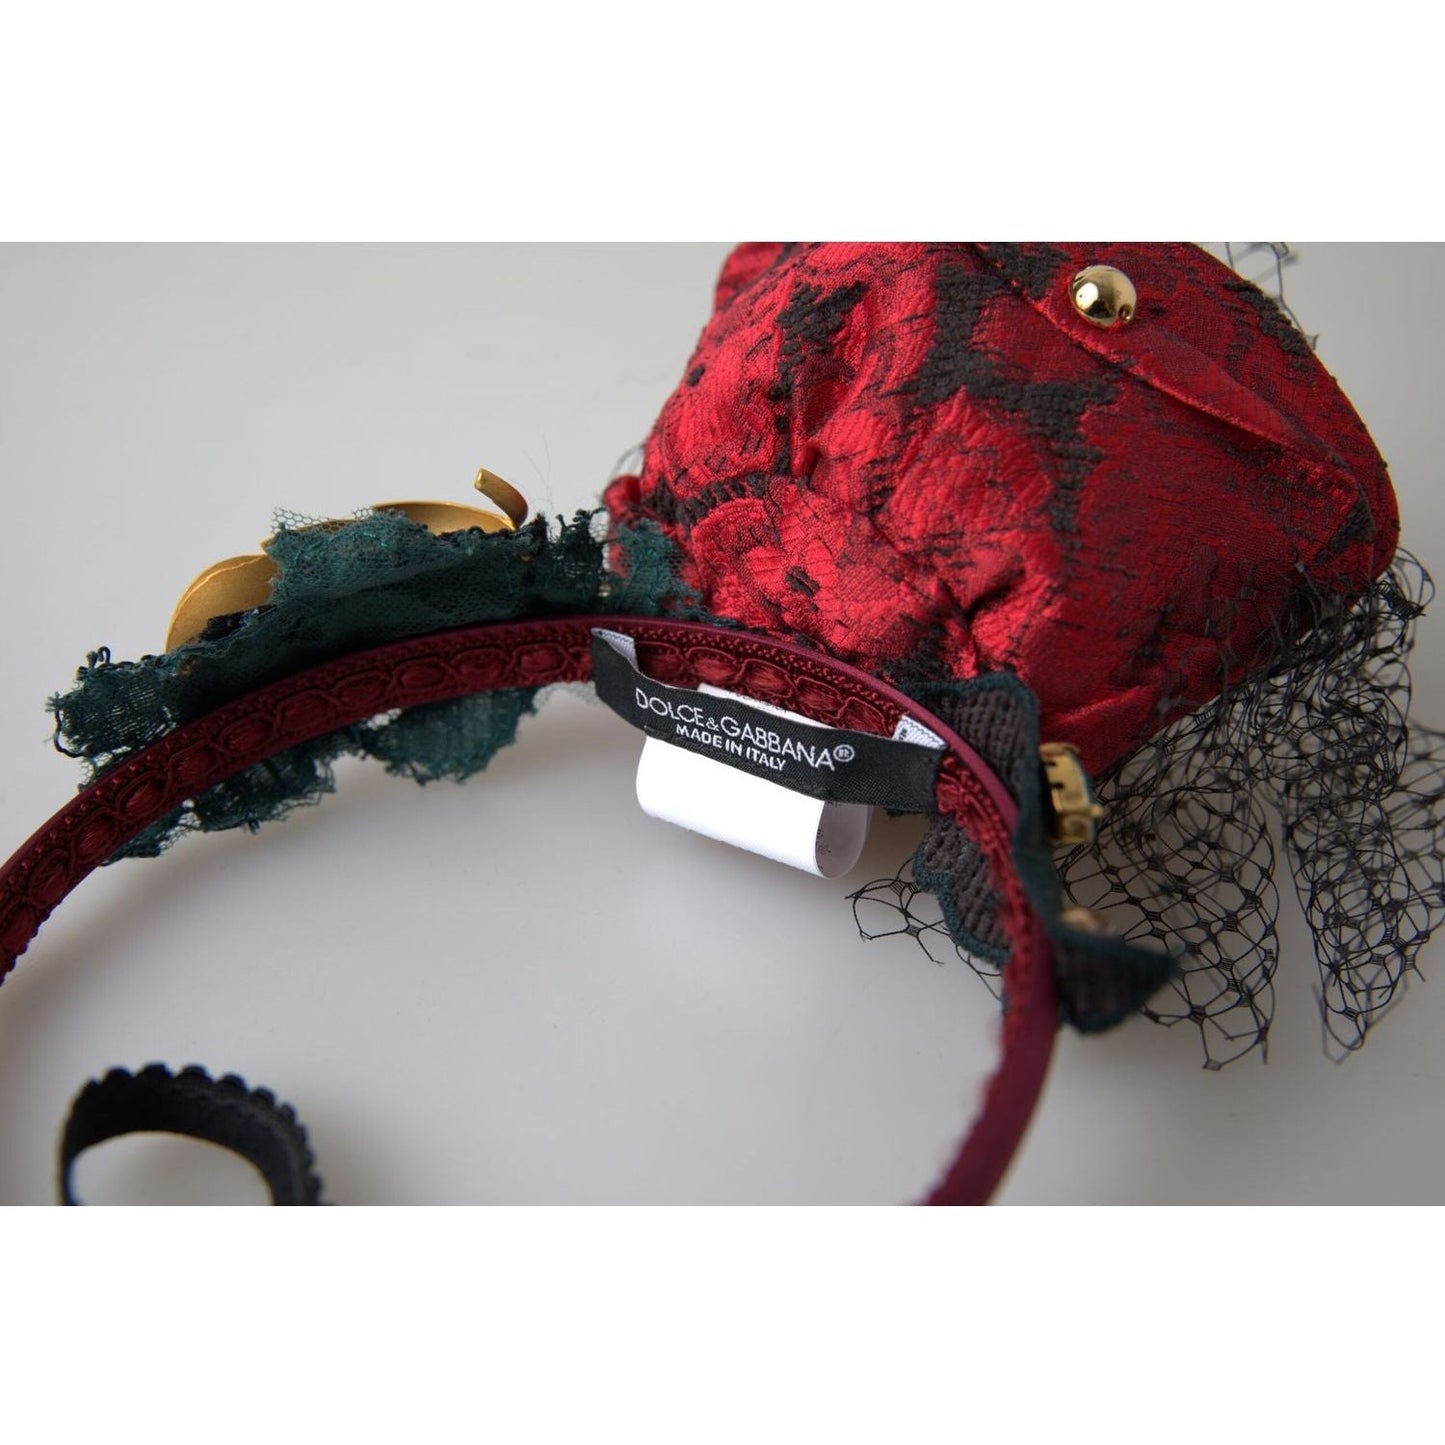 Dolce & Gabbana Enchanted Rose Crystal Headband Diadem red-with-multicolor-rose-silk-crystal-netted-logo-diadem-headband 465A2215-scaled-1b2f3a9f-9ed.jpg